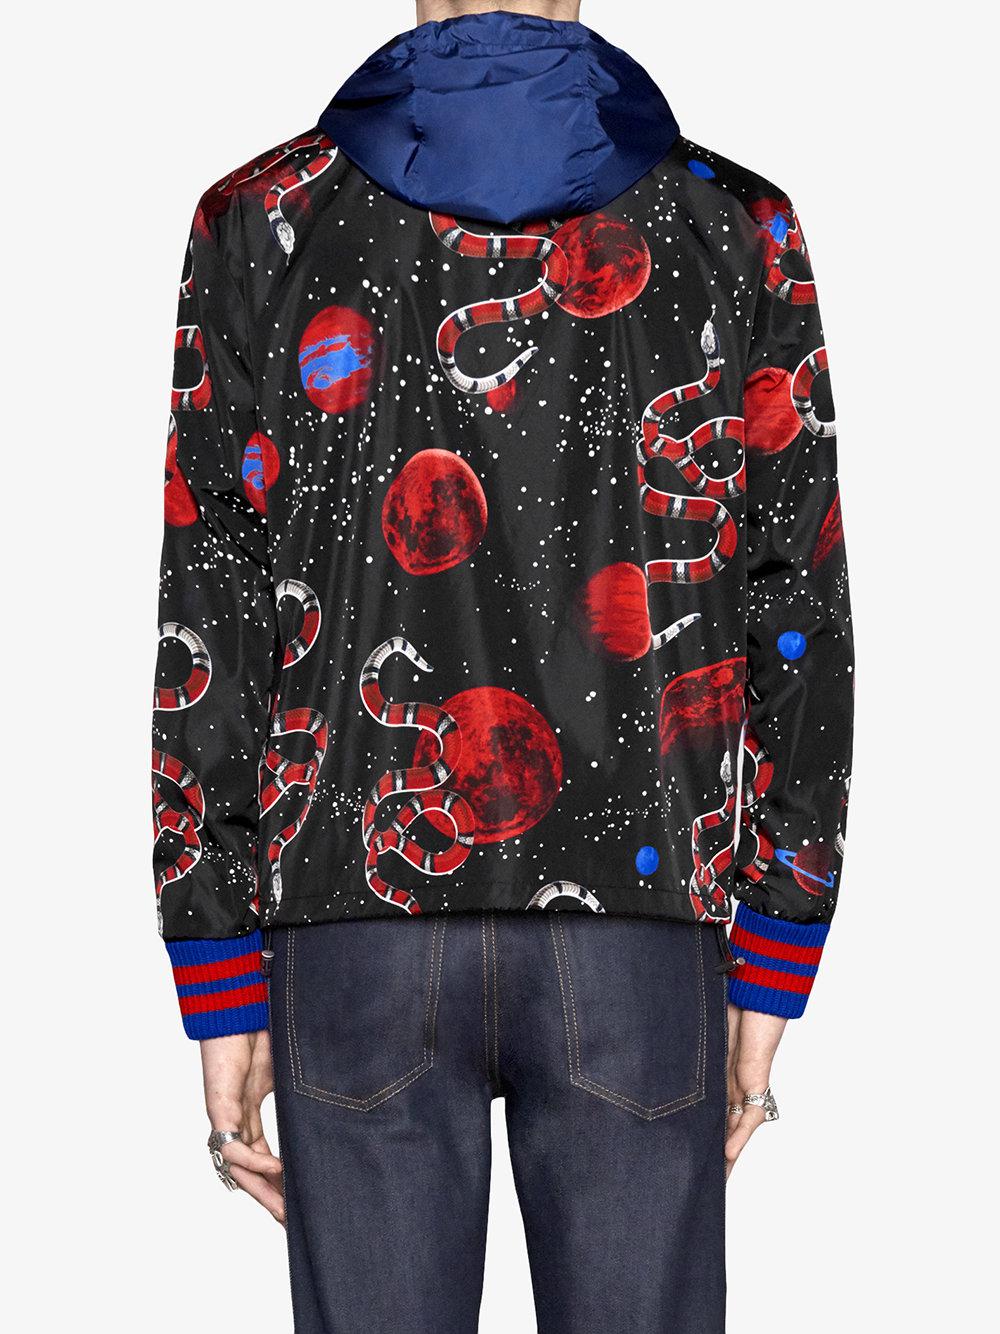 gucci space snake sweatshirt